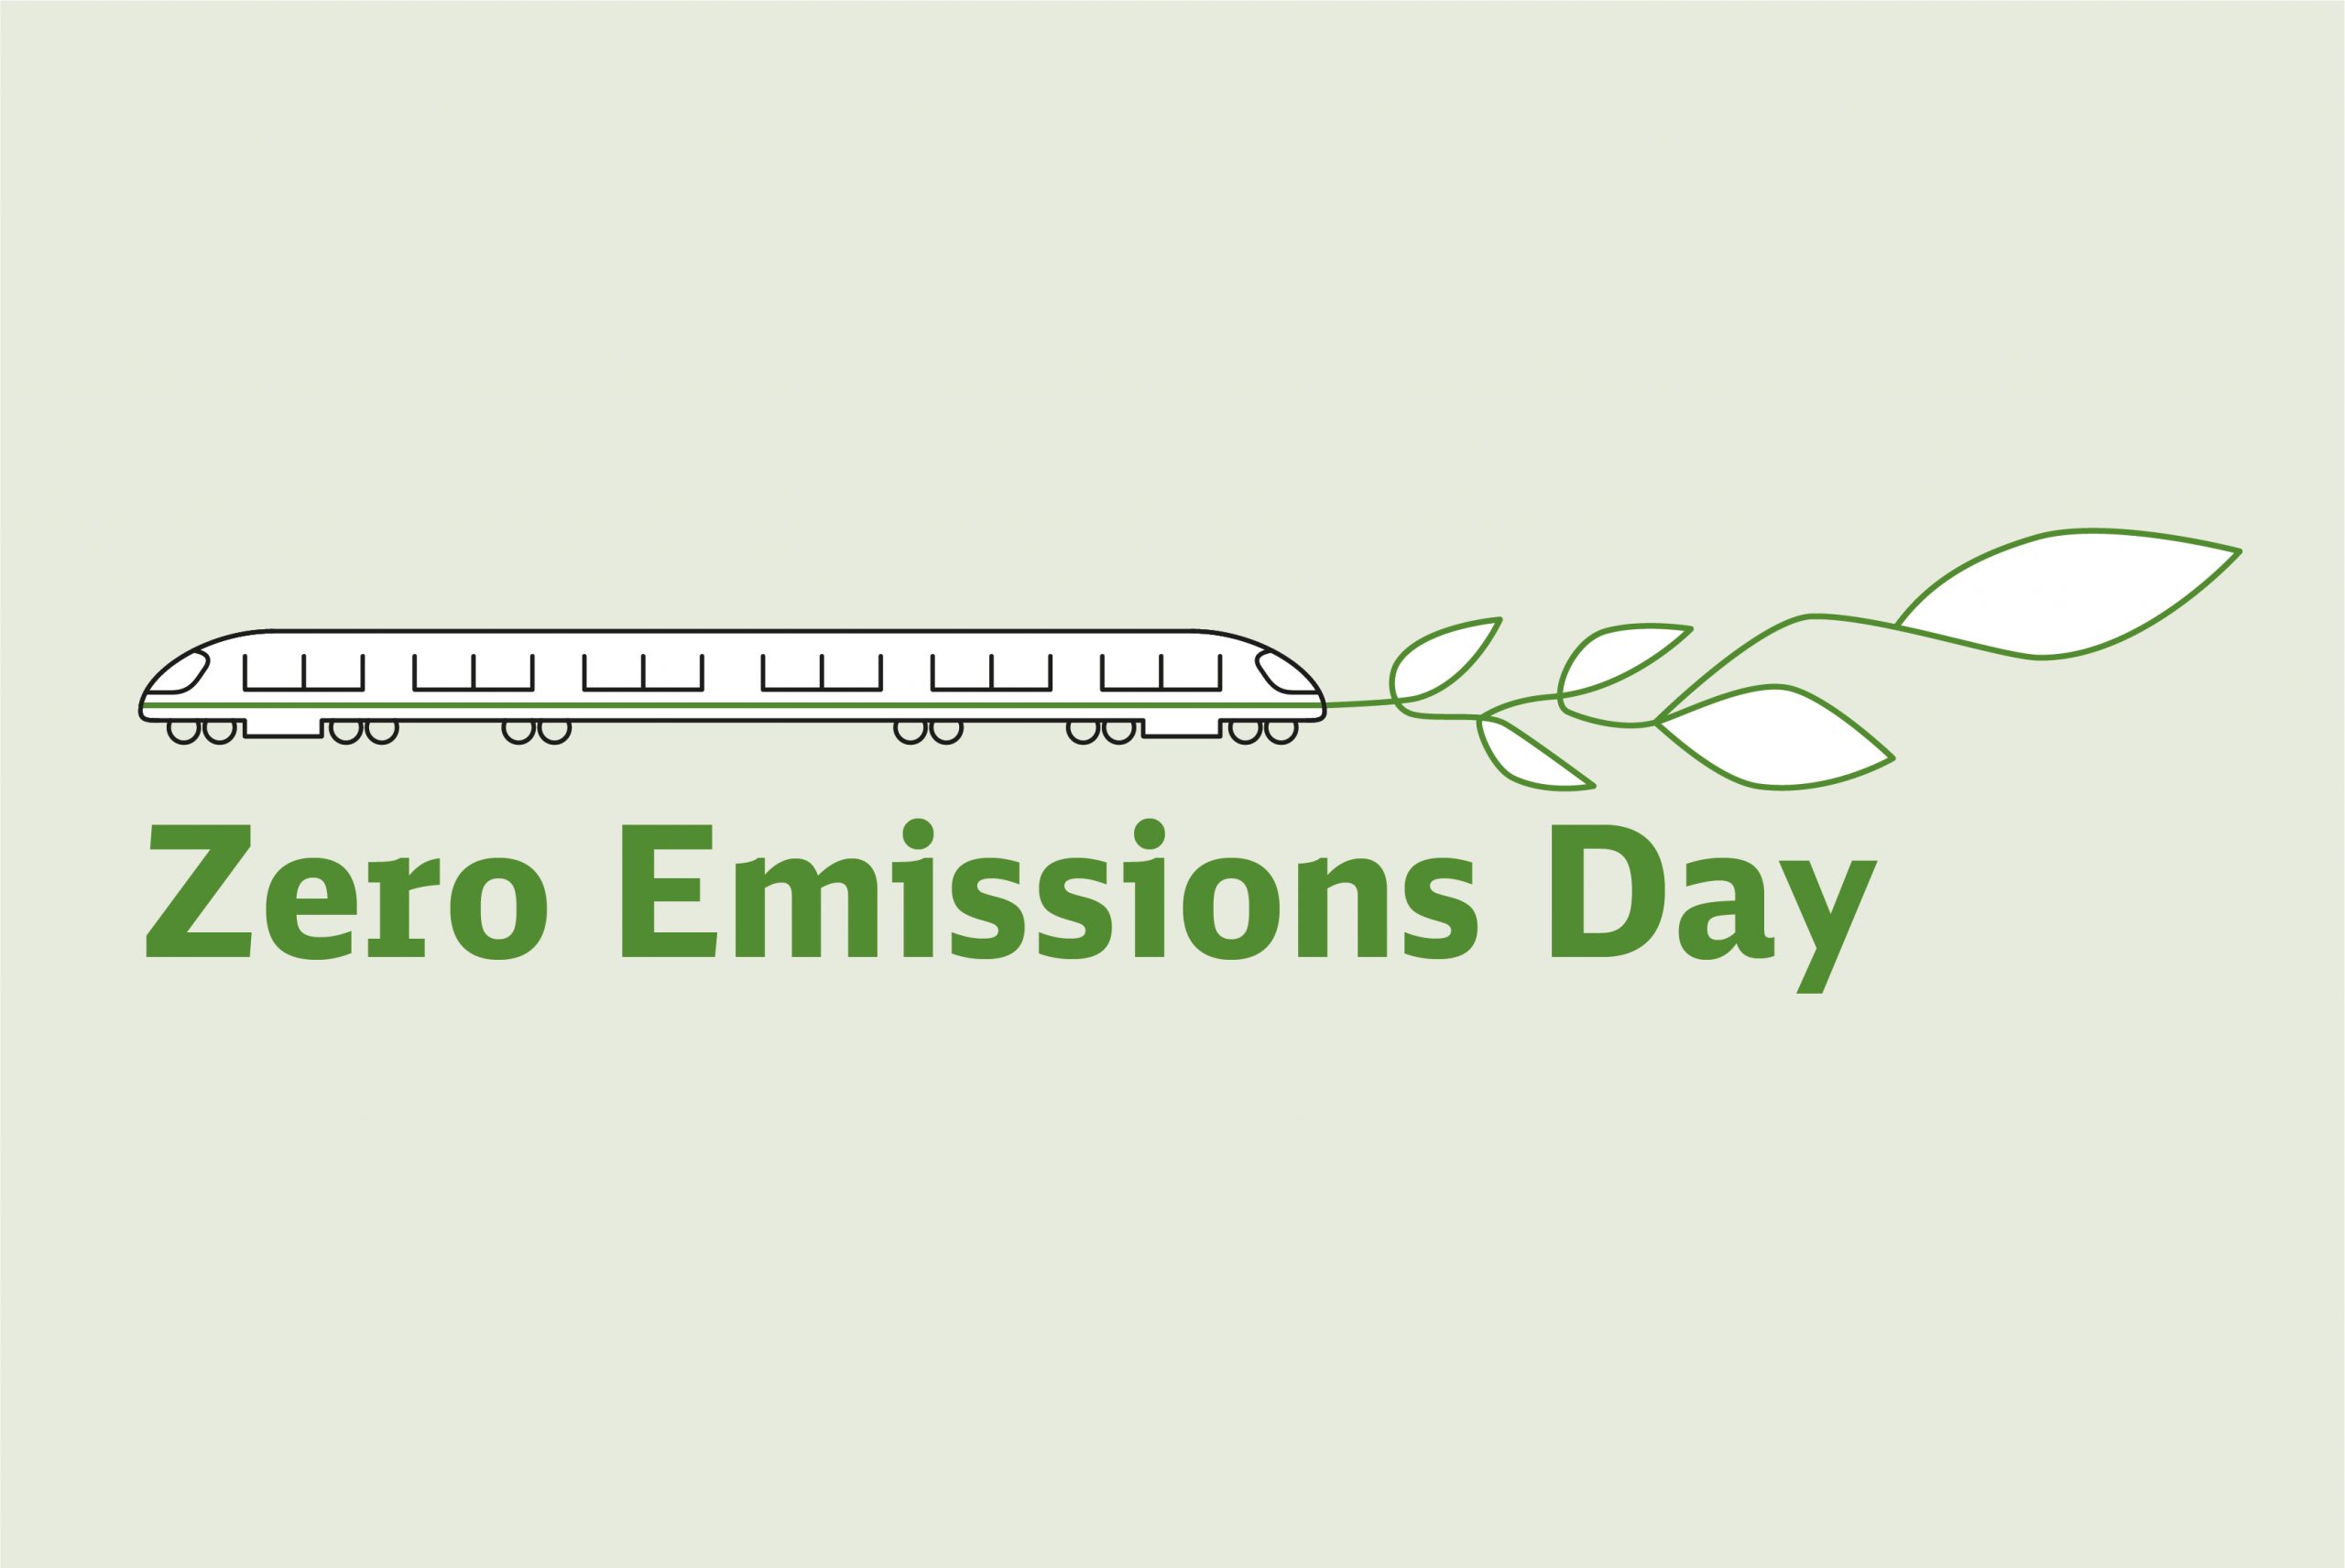 Emissionsfrei - Zero Emissions Day